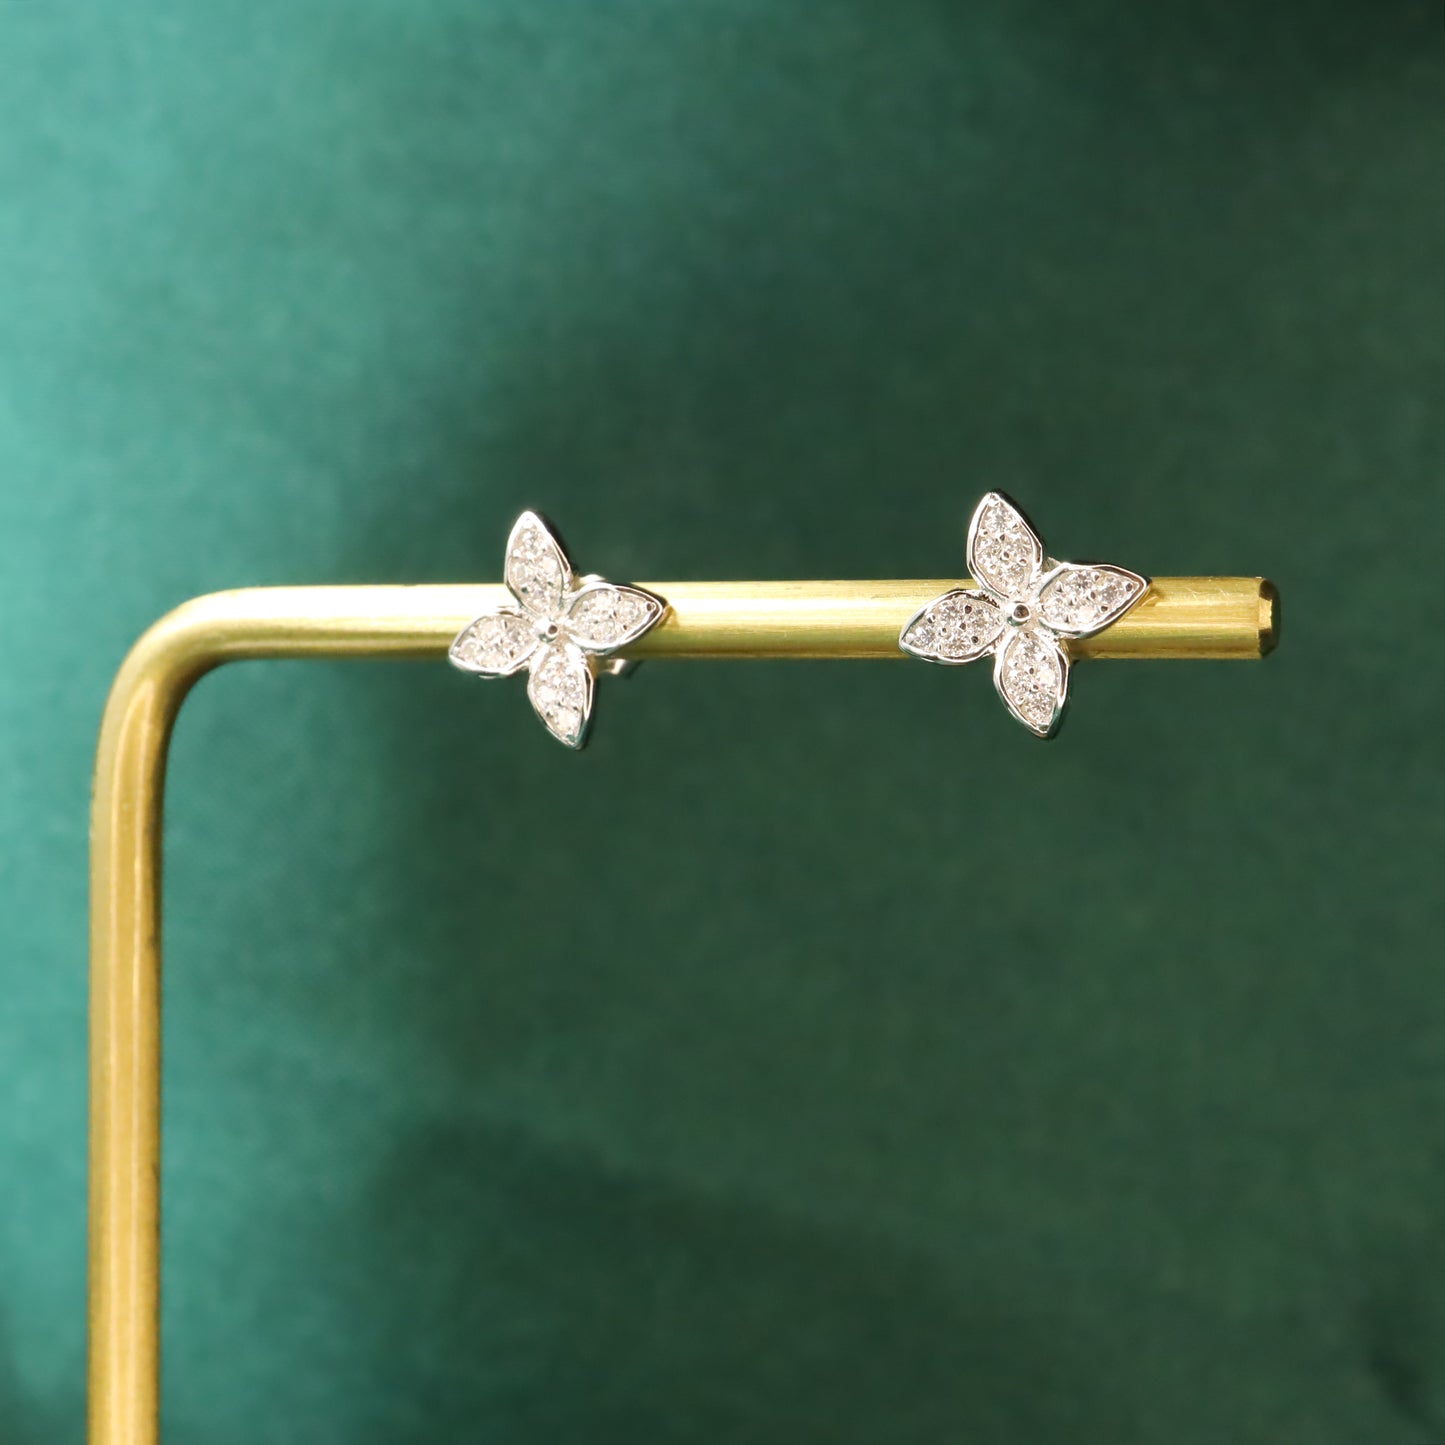 Four Petal Flower S925 Sterling Silver Stud Earrings (Color: Silver）